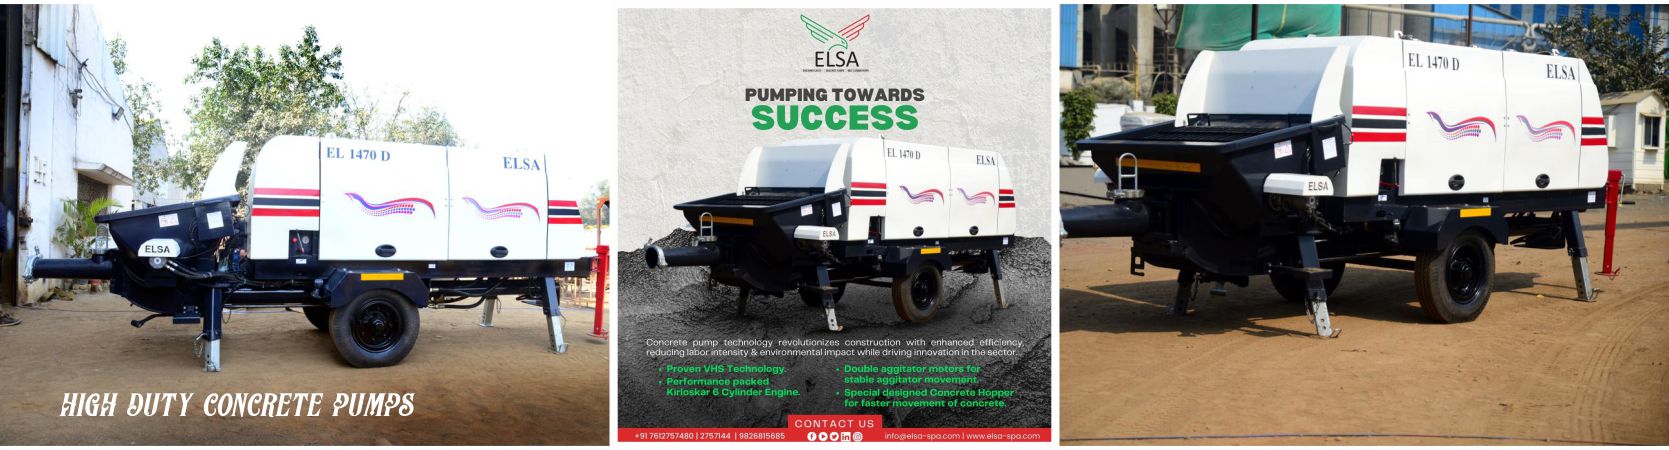 ELSA Concrete pump